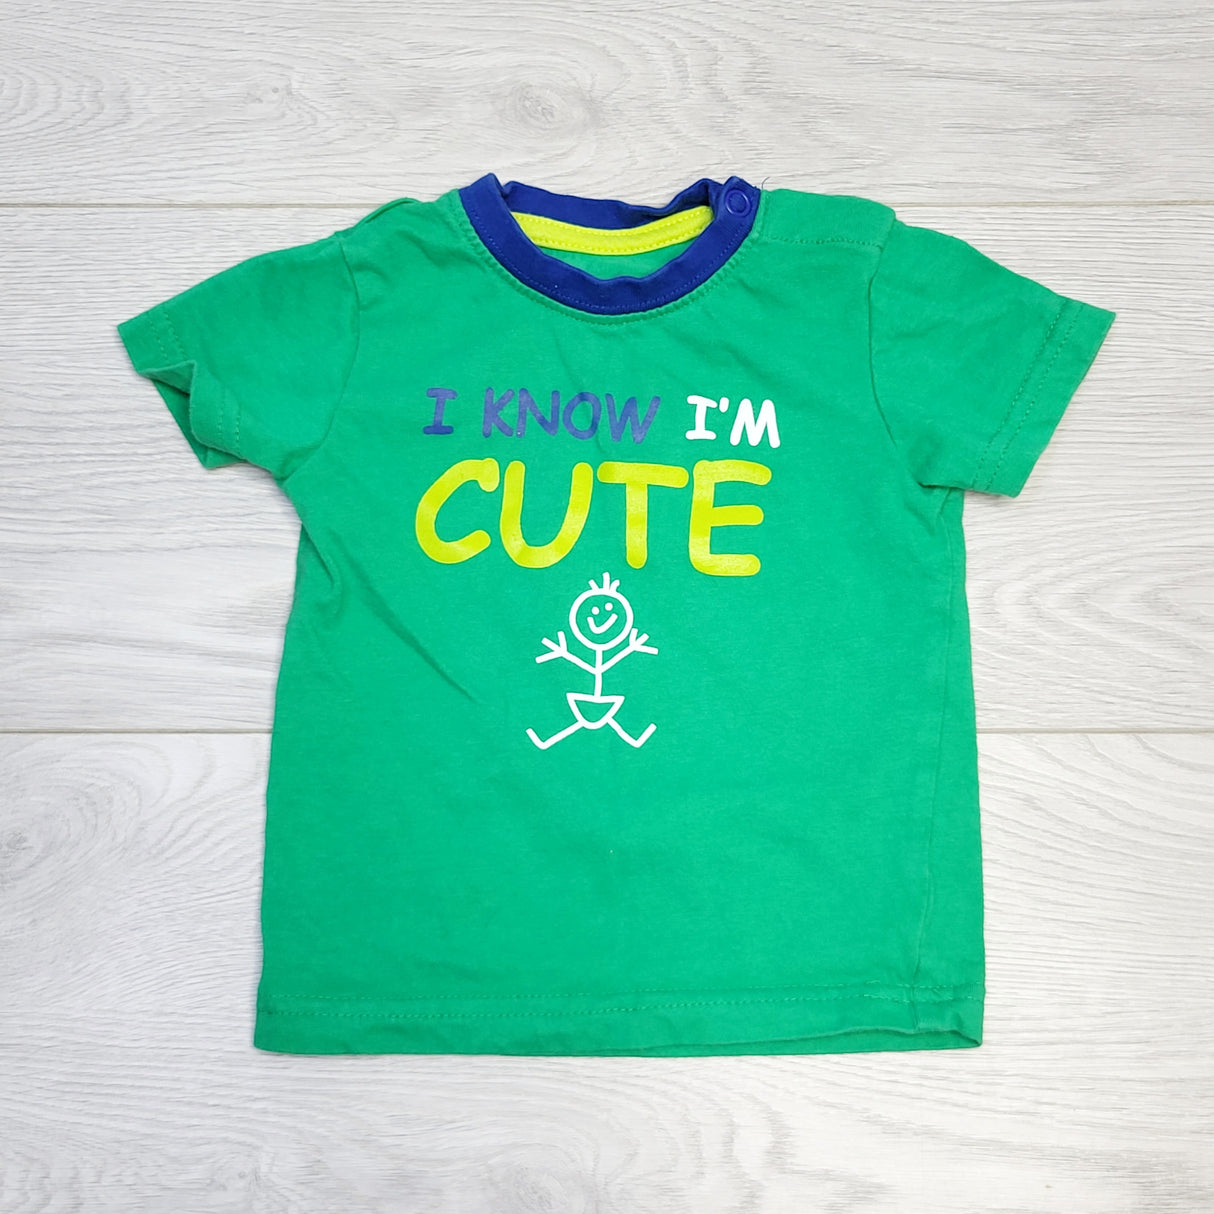 CHOL2 - George green "I Know I'm Cute" t-shirt, size 3-6 months